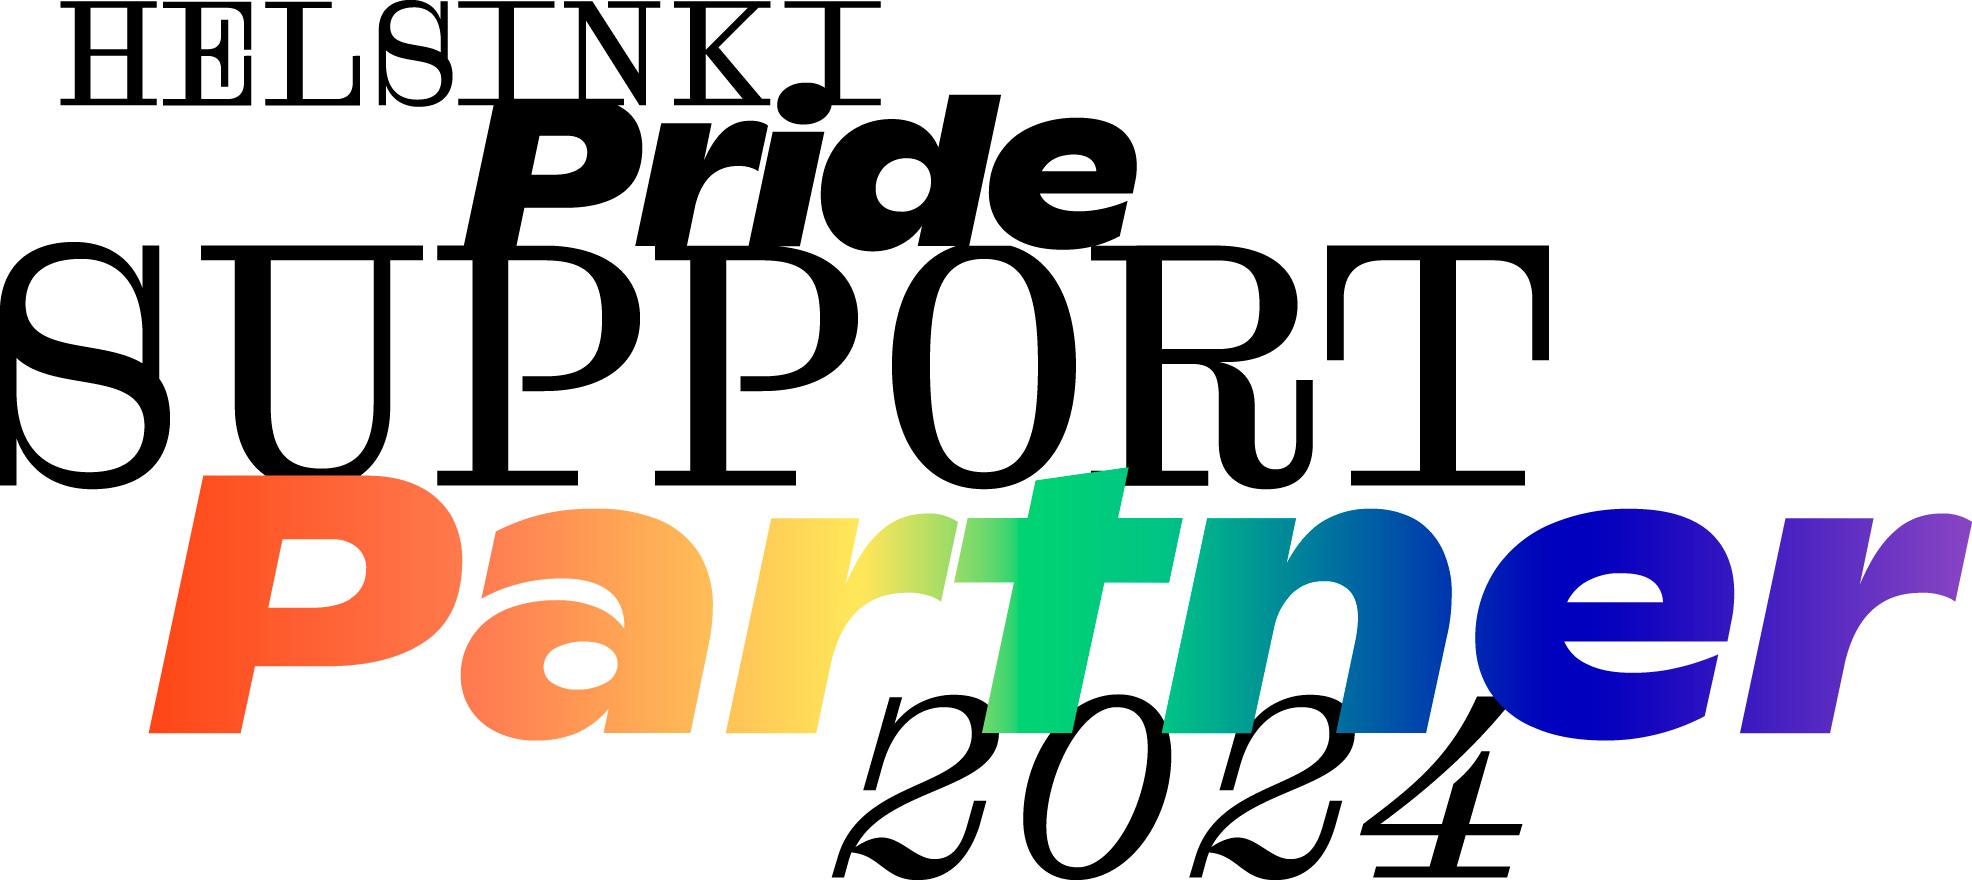 Helsinki Priden kumppanilogo, jossa lukee "Helsinki Pride Support Partner 2024".